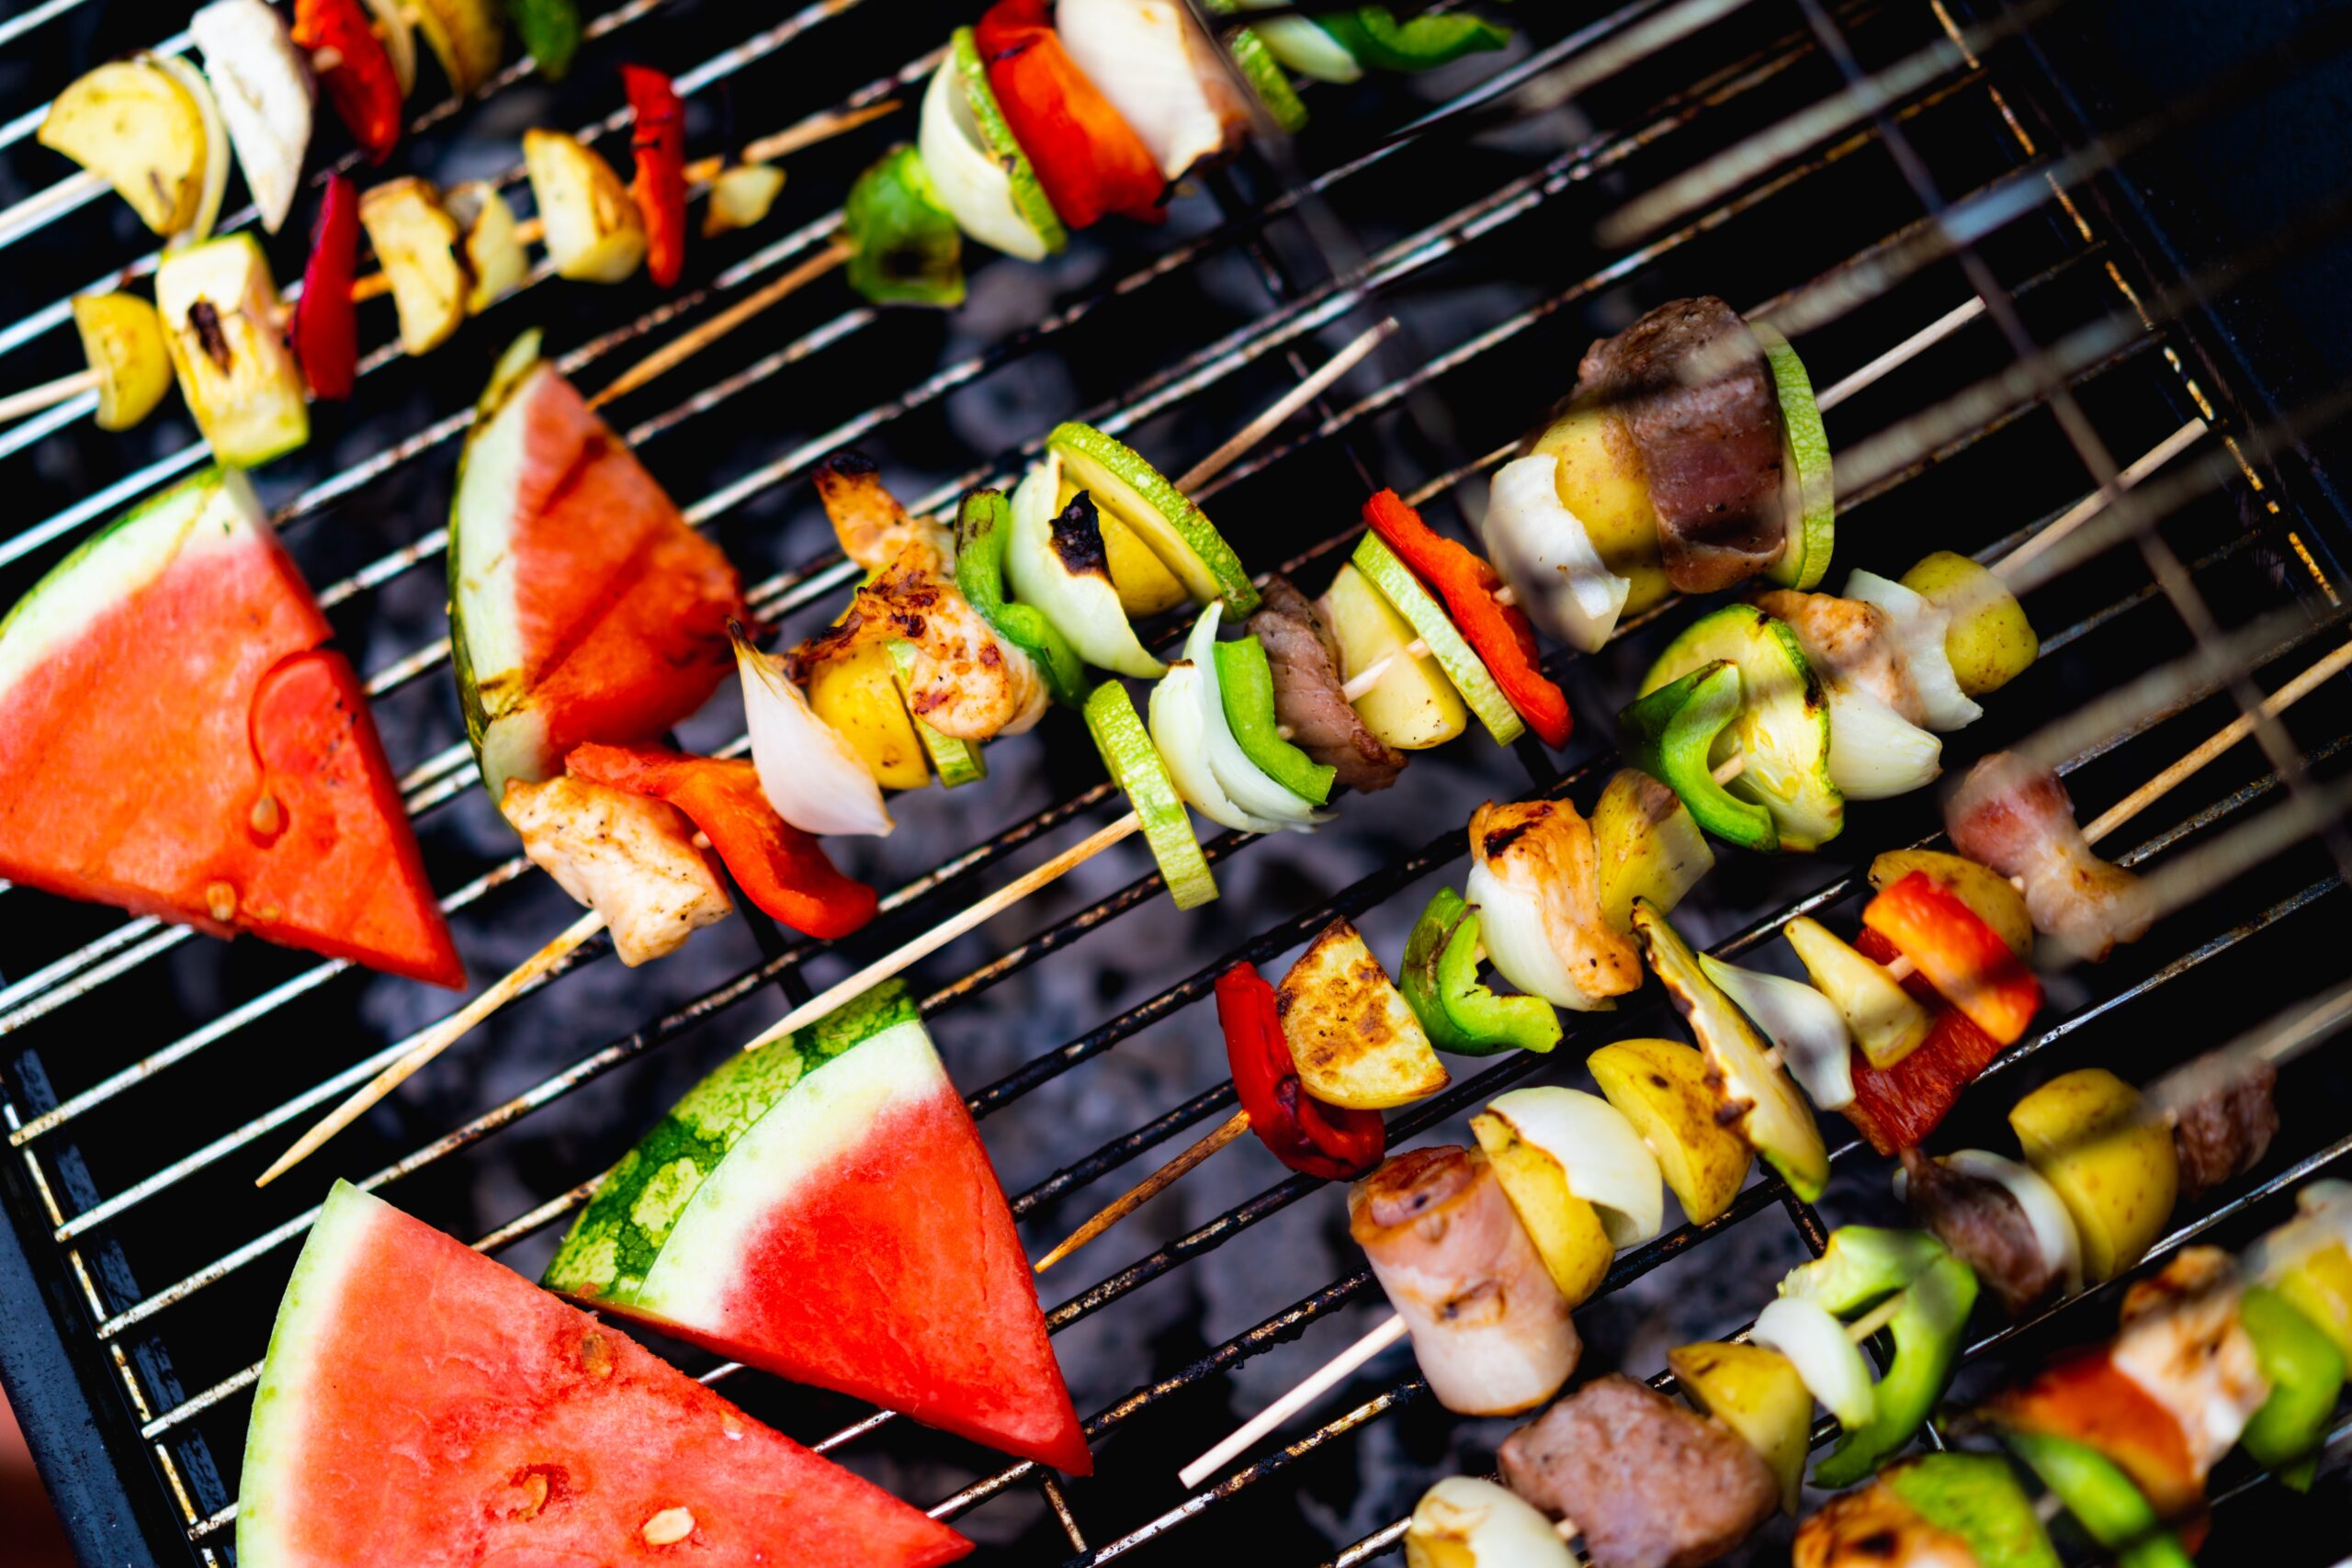 Campervan cooking kebabs on the grill